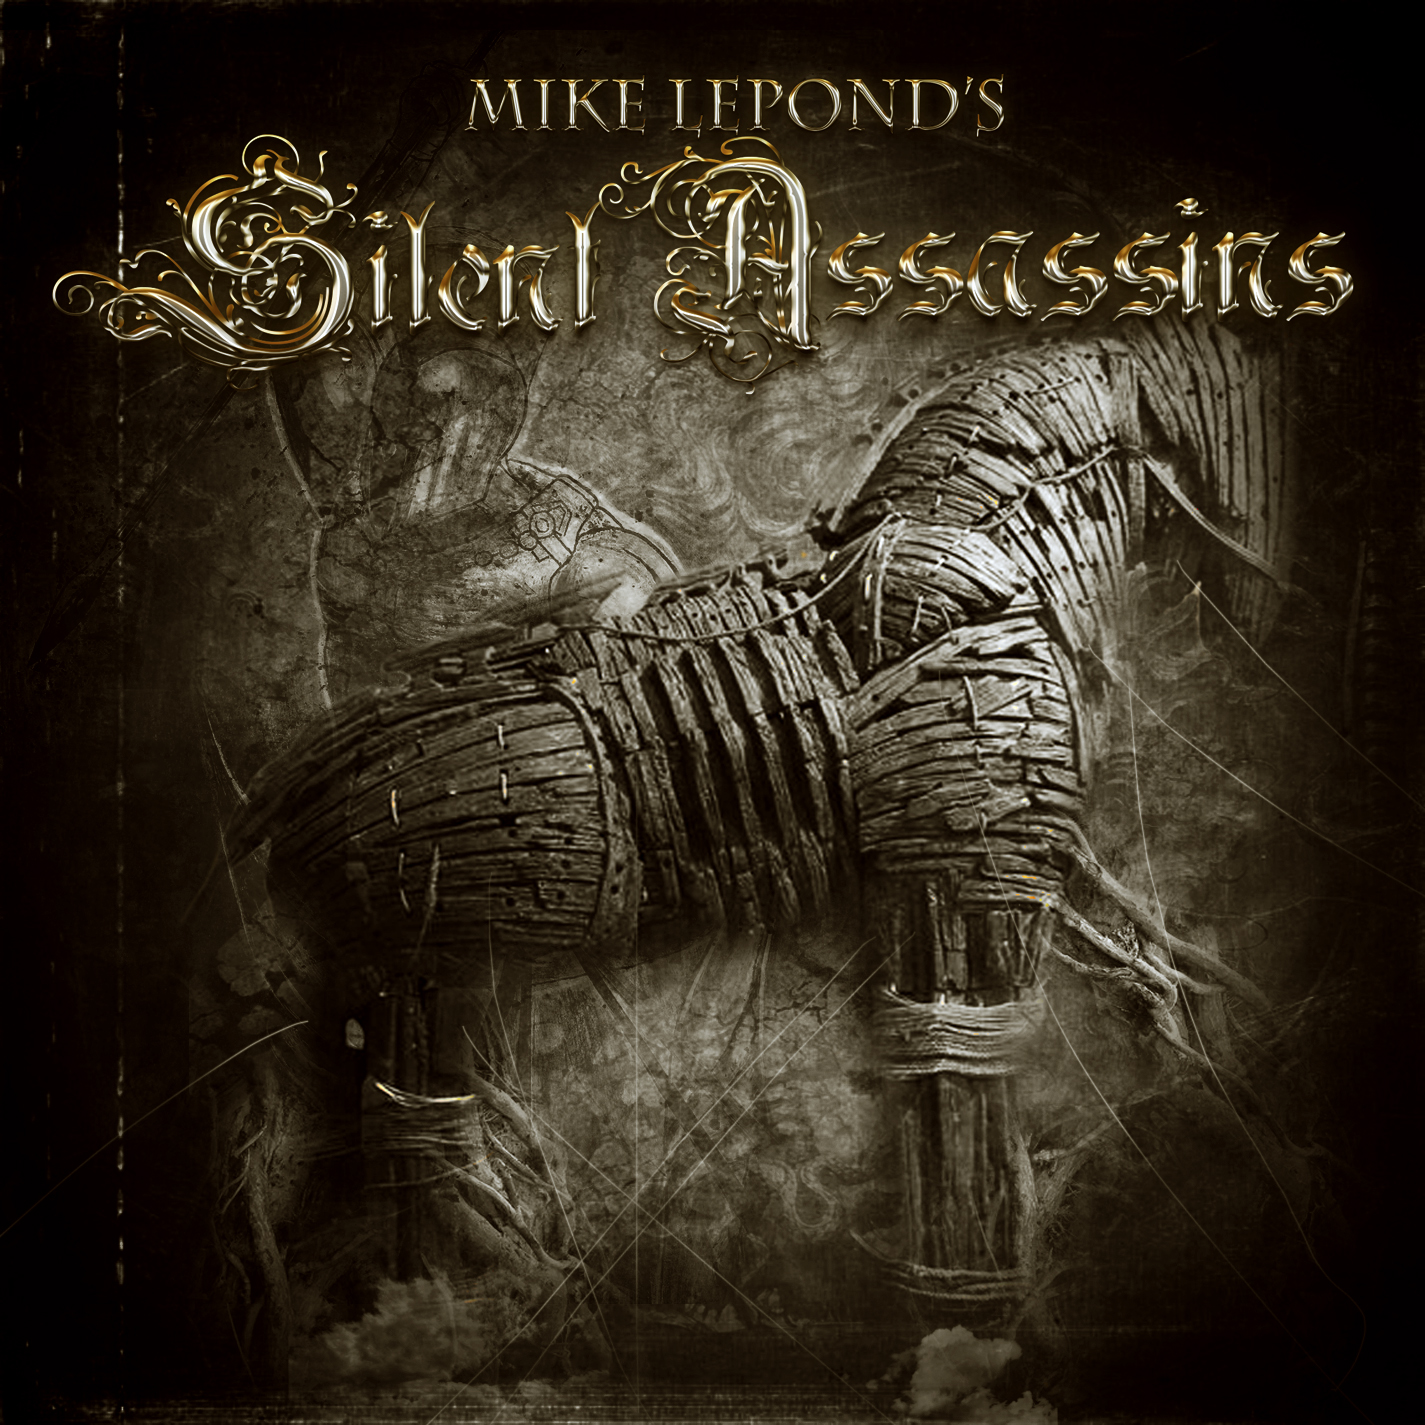  Mike Lepond – Mike Lepond’s Silent Assassins